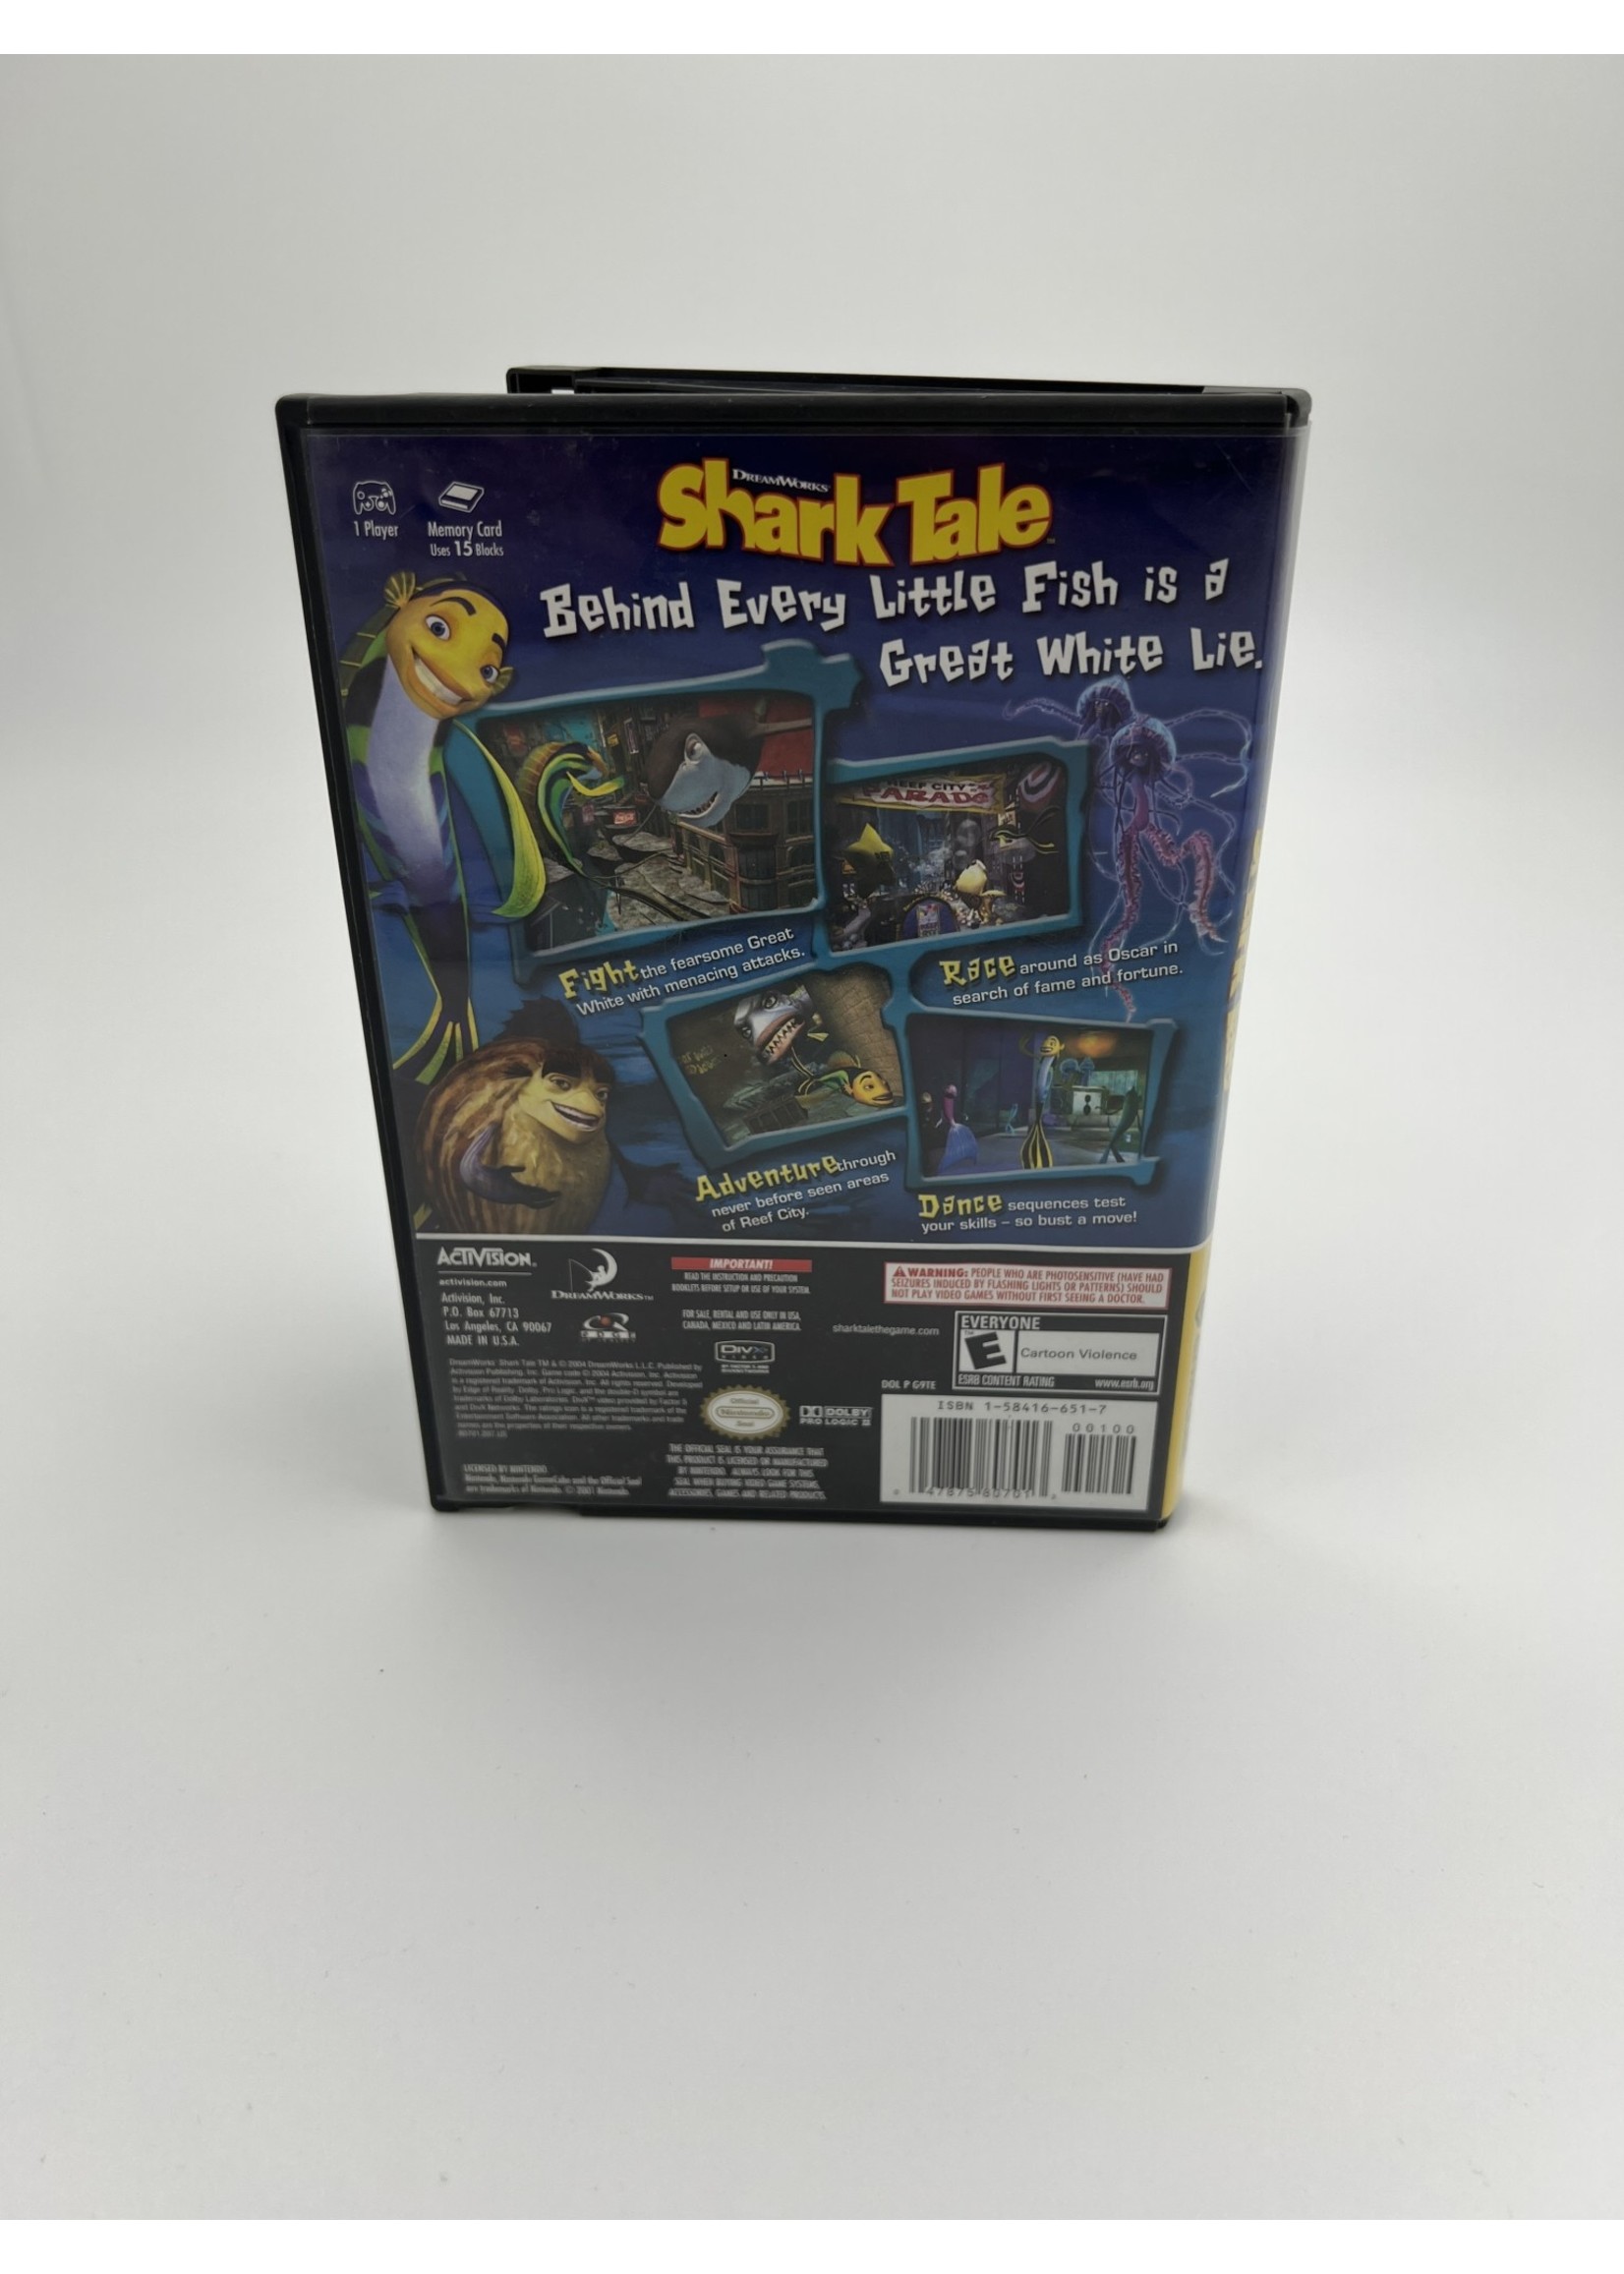 Nintendo Dreamworks Shark Tale Gamecube